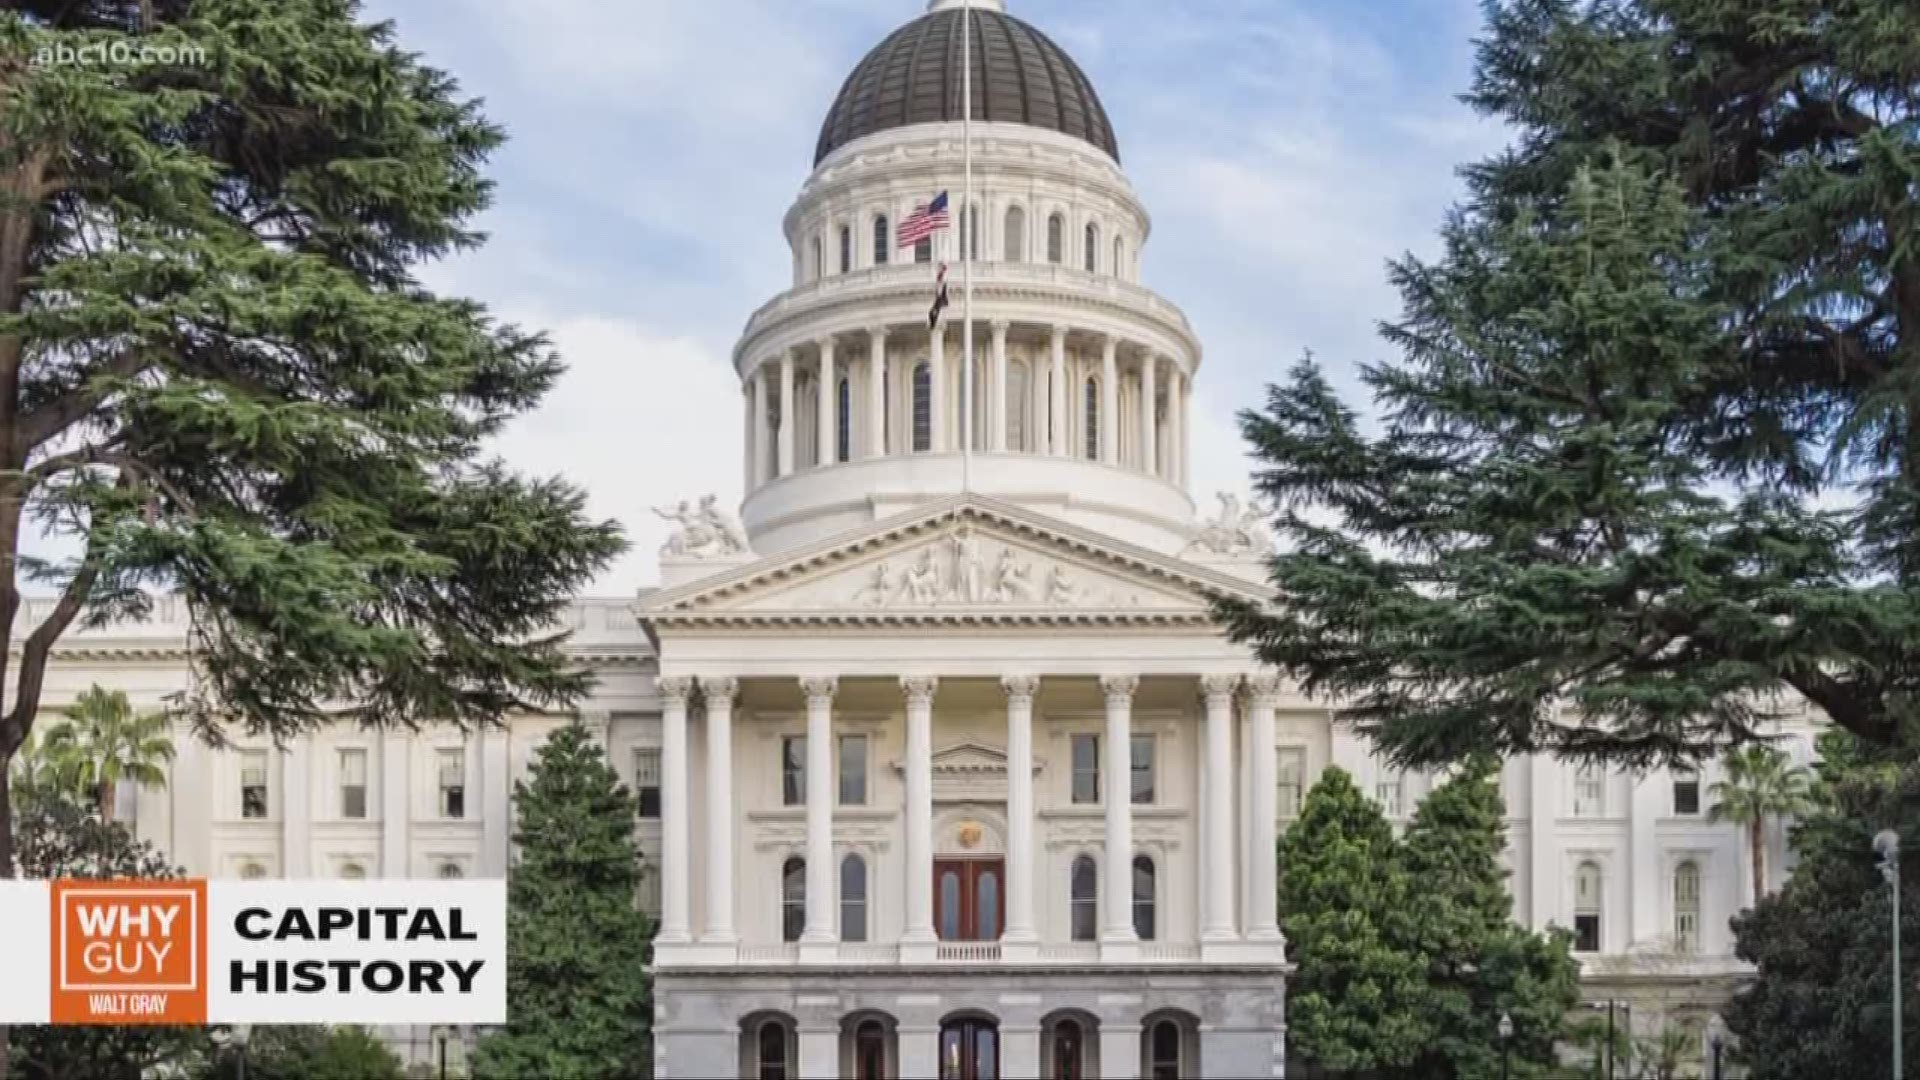 ABC10's Why Guy, Walt Gray, looks into why Sacramento is the capital of California.